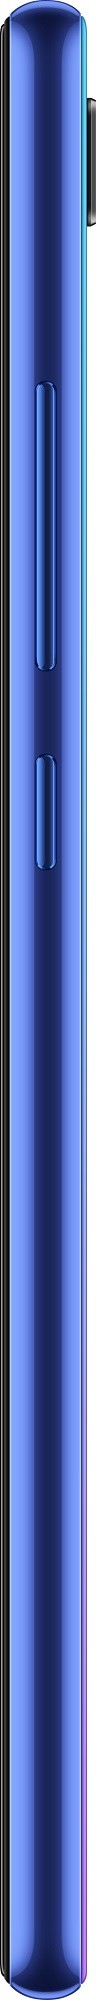 Смартфон Xiaomi Mi8 Lite 4/64GB Синий